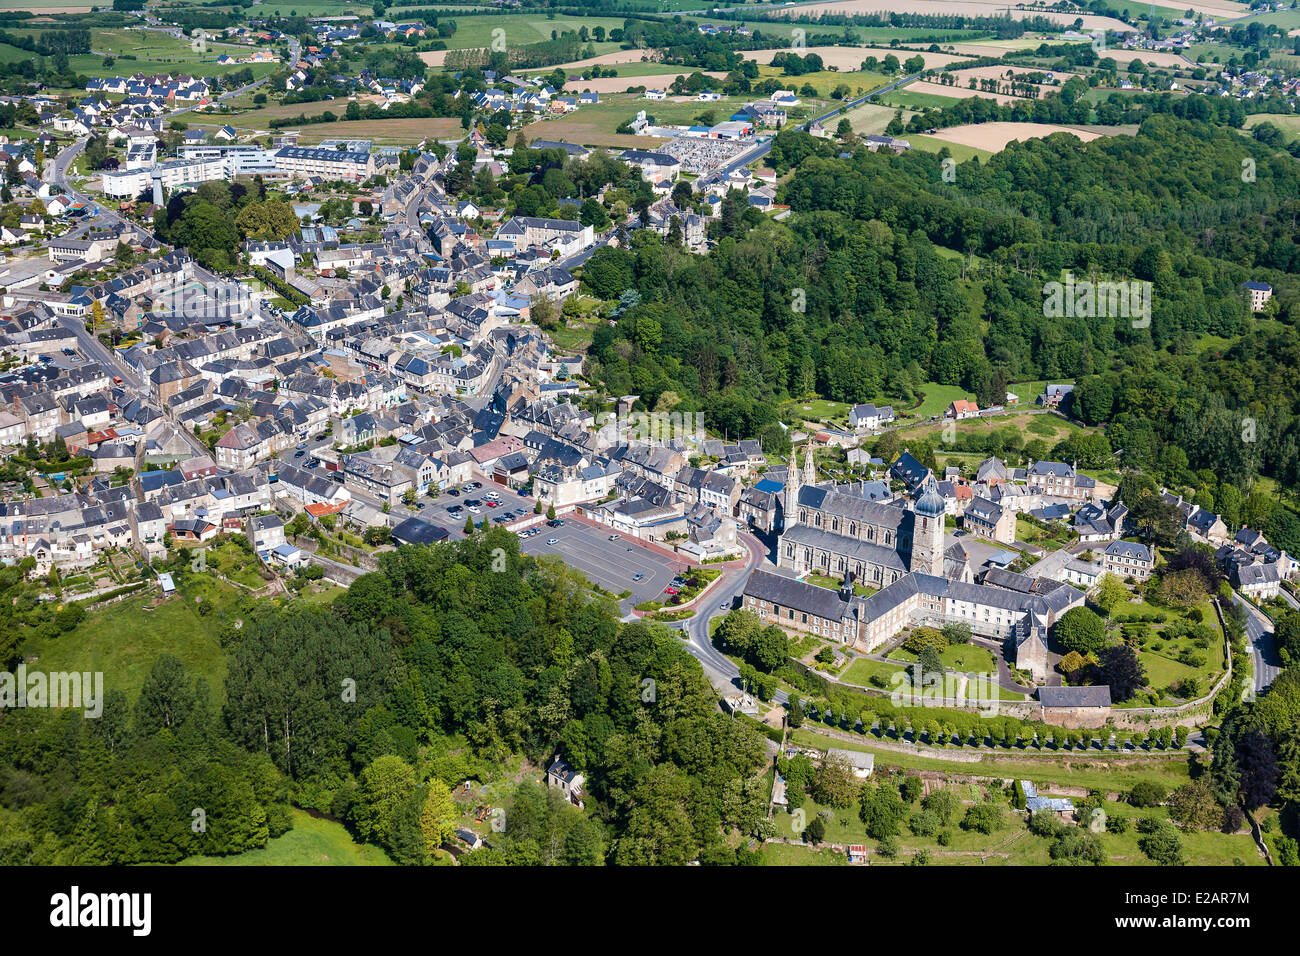 France, Manche, Saint James (aerial view) Stock Photo